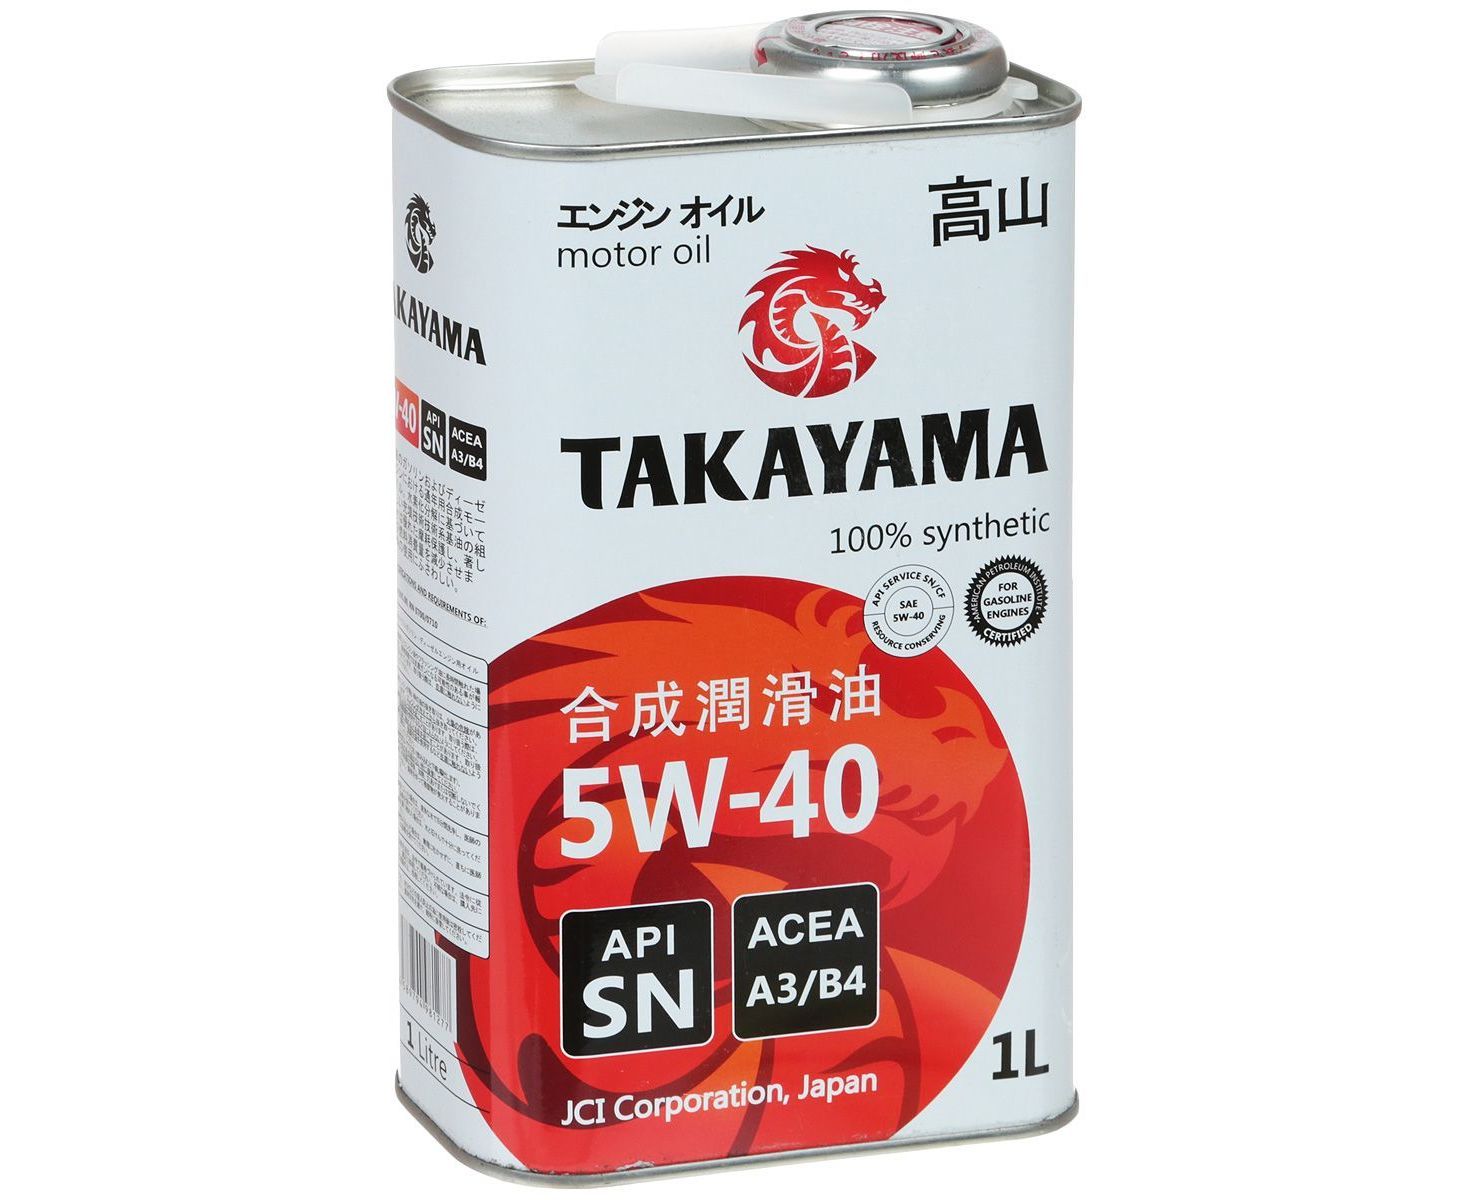 Токояма масло 5w30. Такаяма 5w40 синтетика. Моторное масло Takayama 5w-40. Японское масло 5w40 Такаяма. Takayama 5w-40 API SN/CF.